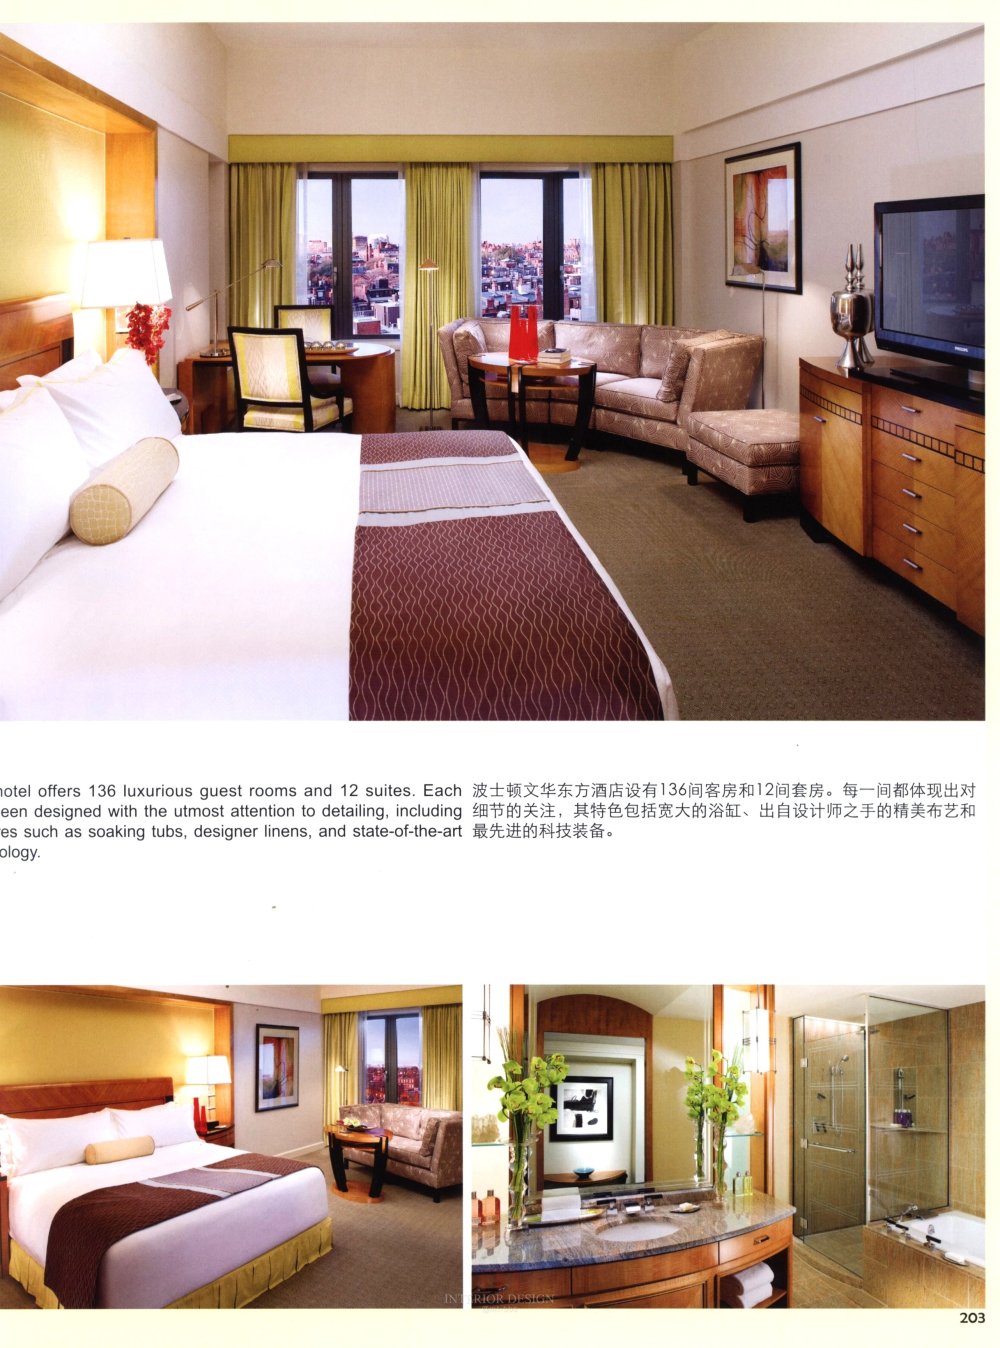 101全球酒店客房 101HOTELS GUEST ROOMS_图站_AiJpgg_com_198.jpg